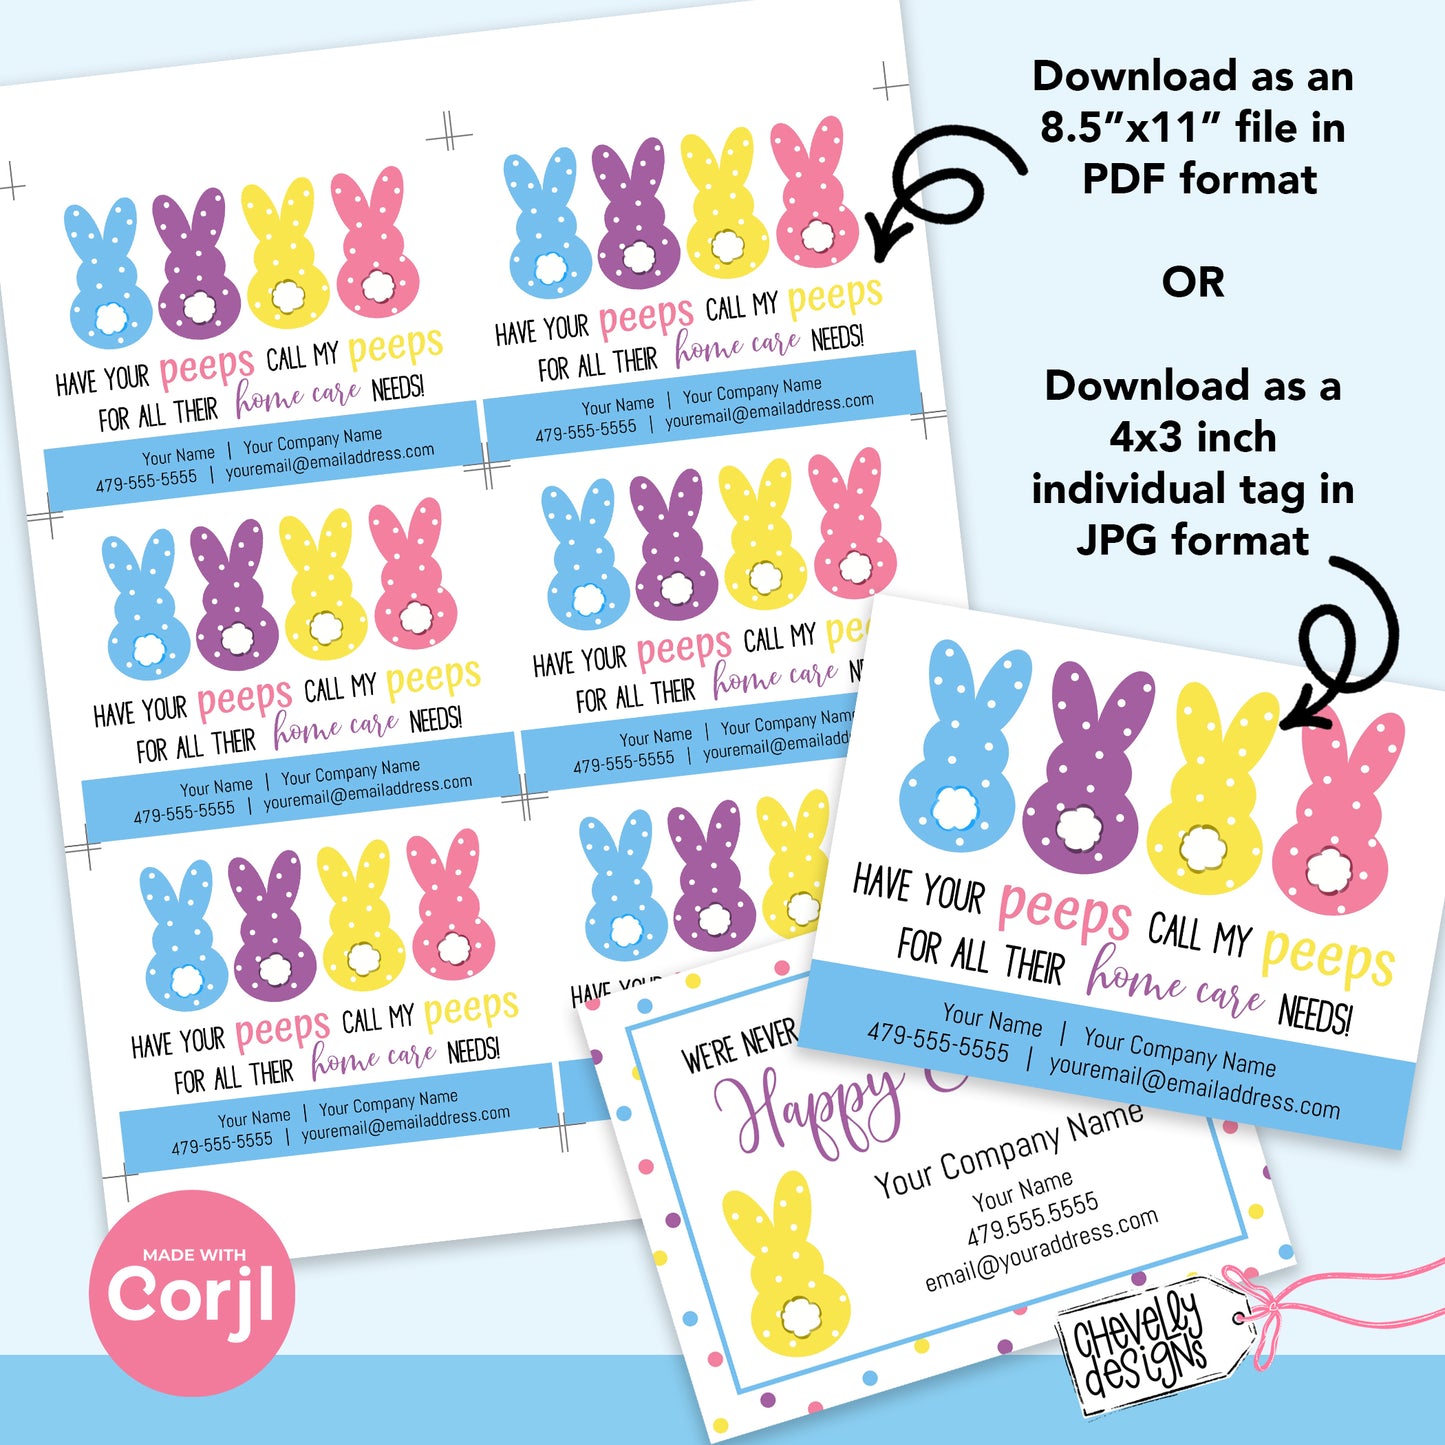 Editable - Call My Peeps for Home Care Needs - Easter Referral Gift Tags - Printable  Digital File